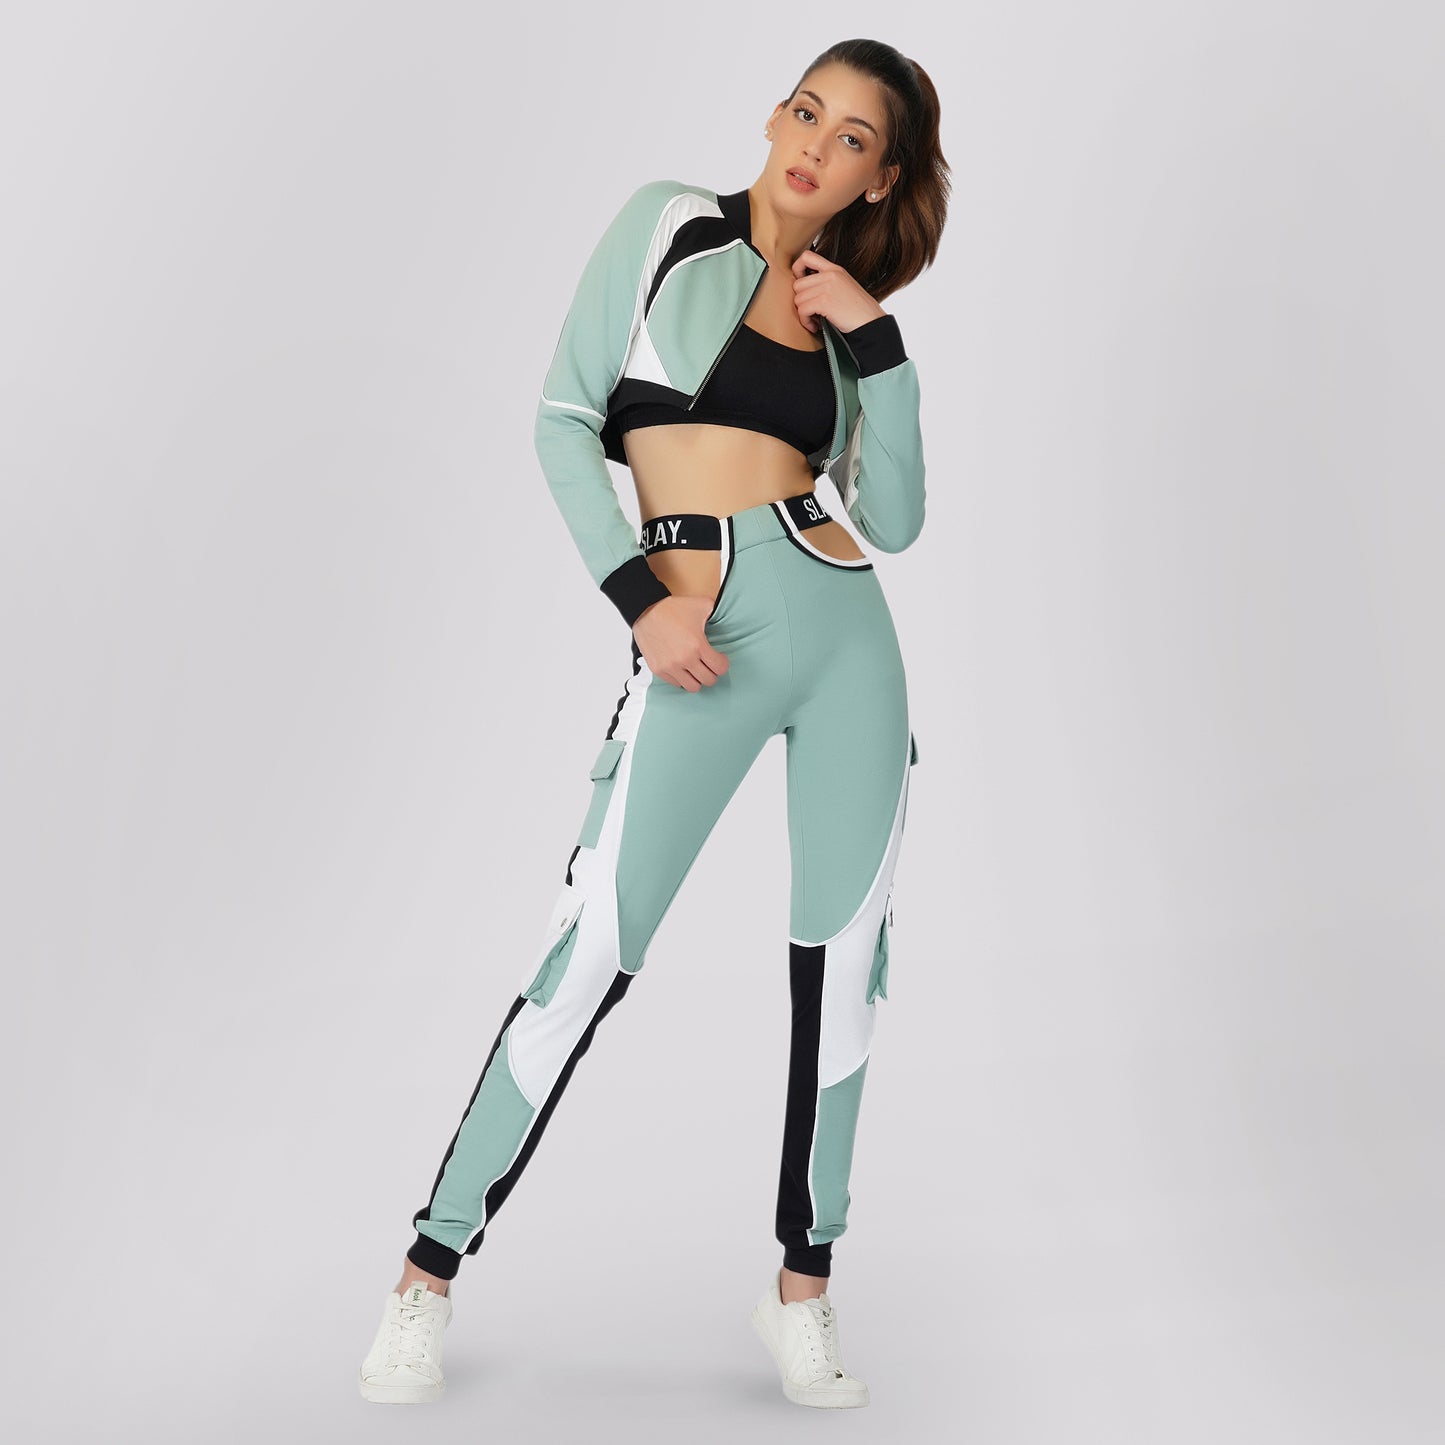 SLAY. Women's Activewear Tracksuit Turquoise Colorblock Crop Jacket & Cargo Pants Co-ord Set Streetwear